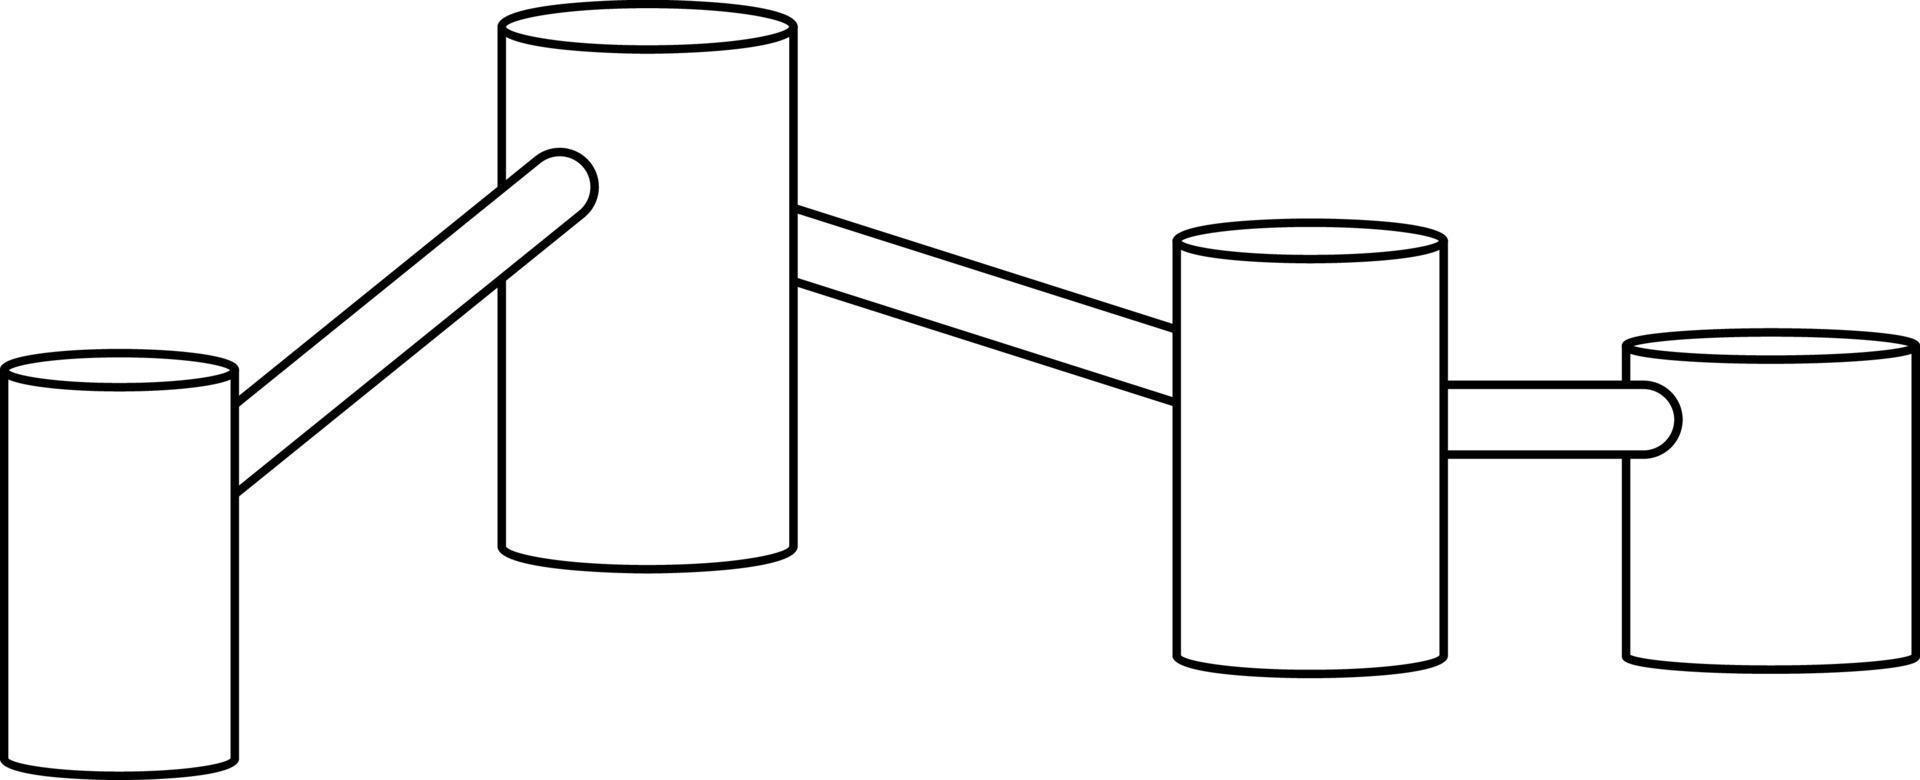 Schwarz-Weiß-Doodle-Charakter vektor